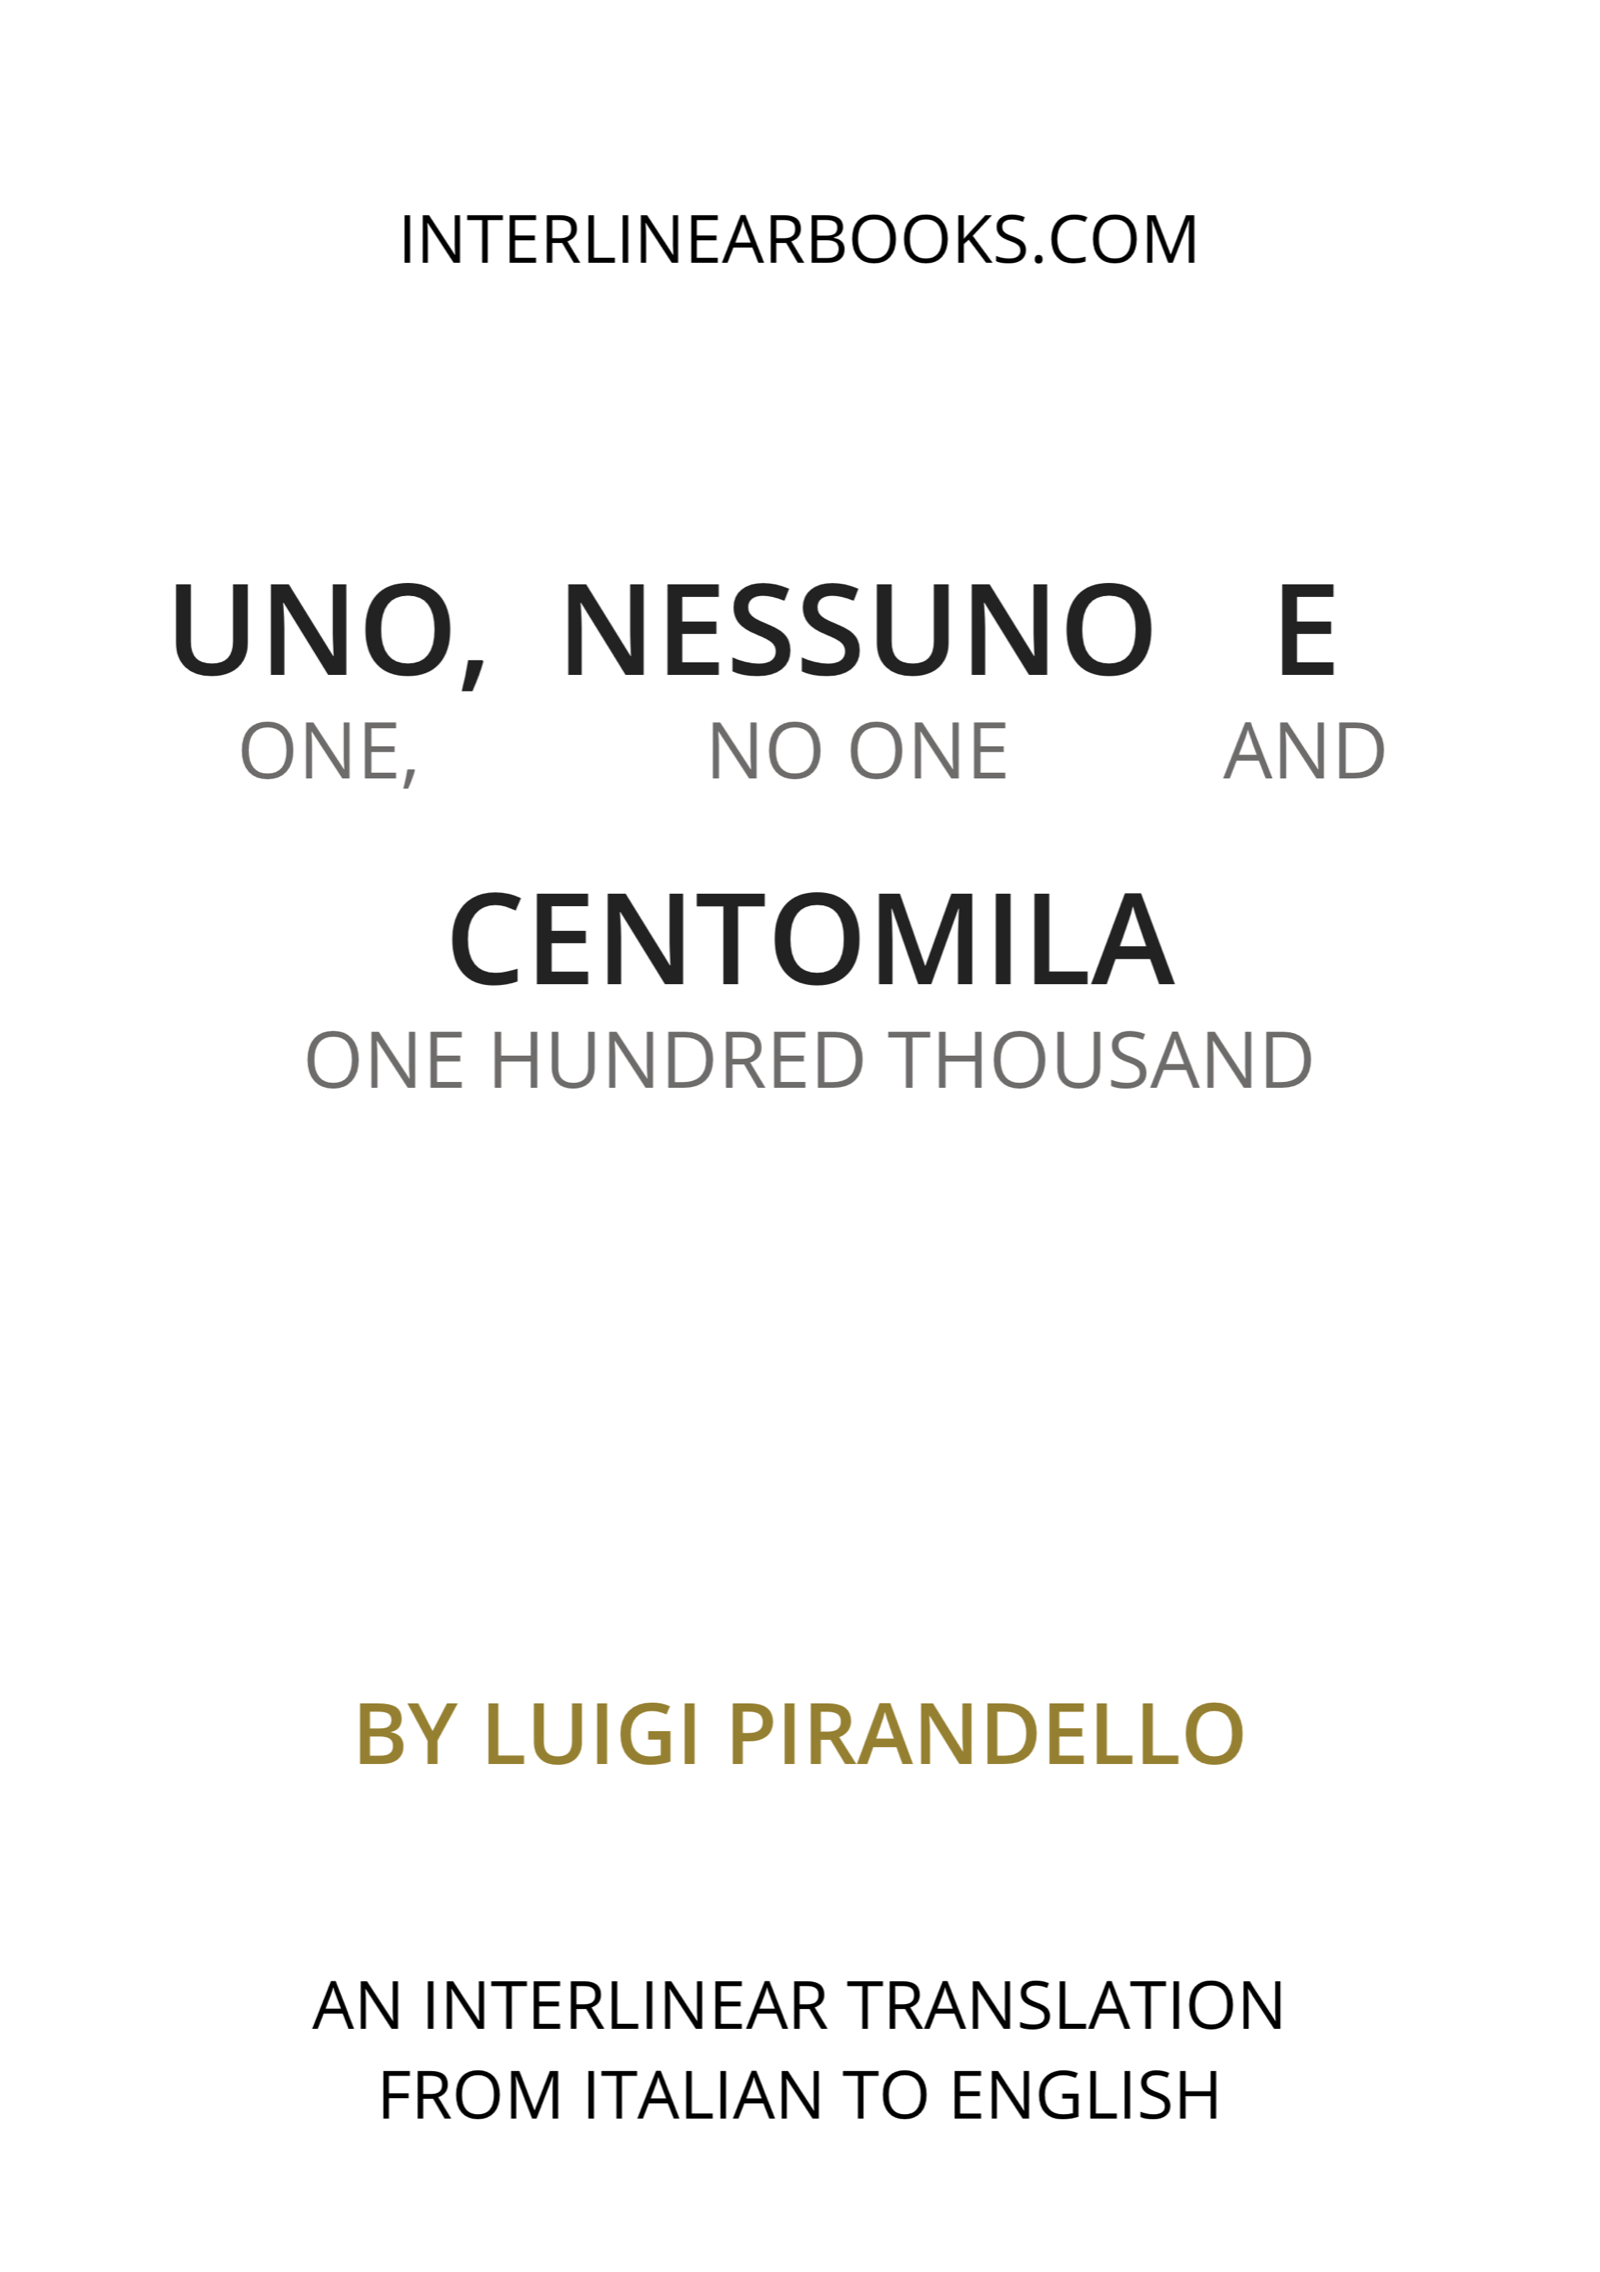 Italian book: Uno, Nessuno e Centomila / One, No One and One Hundred Thousand